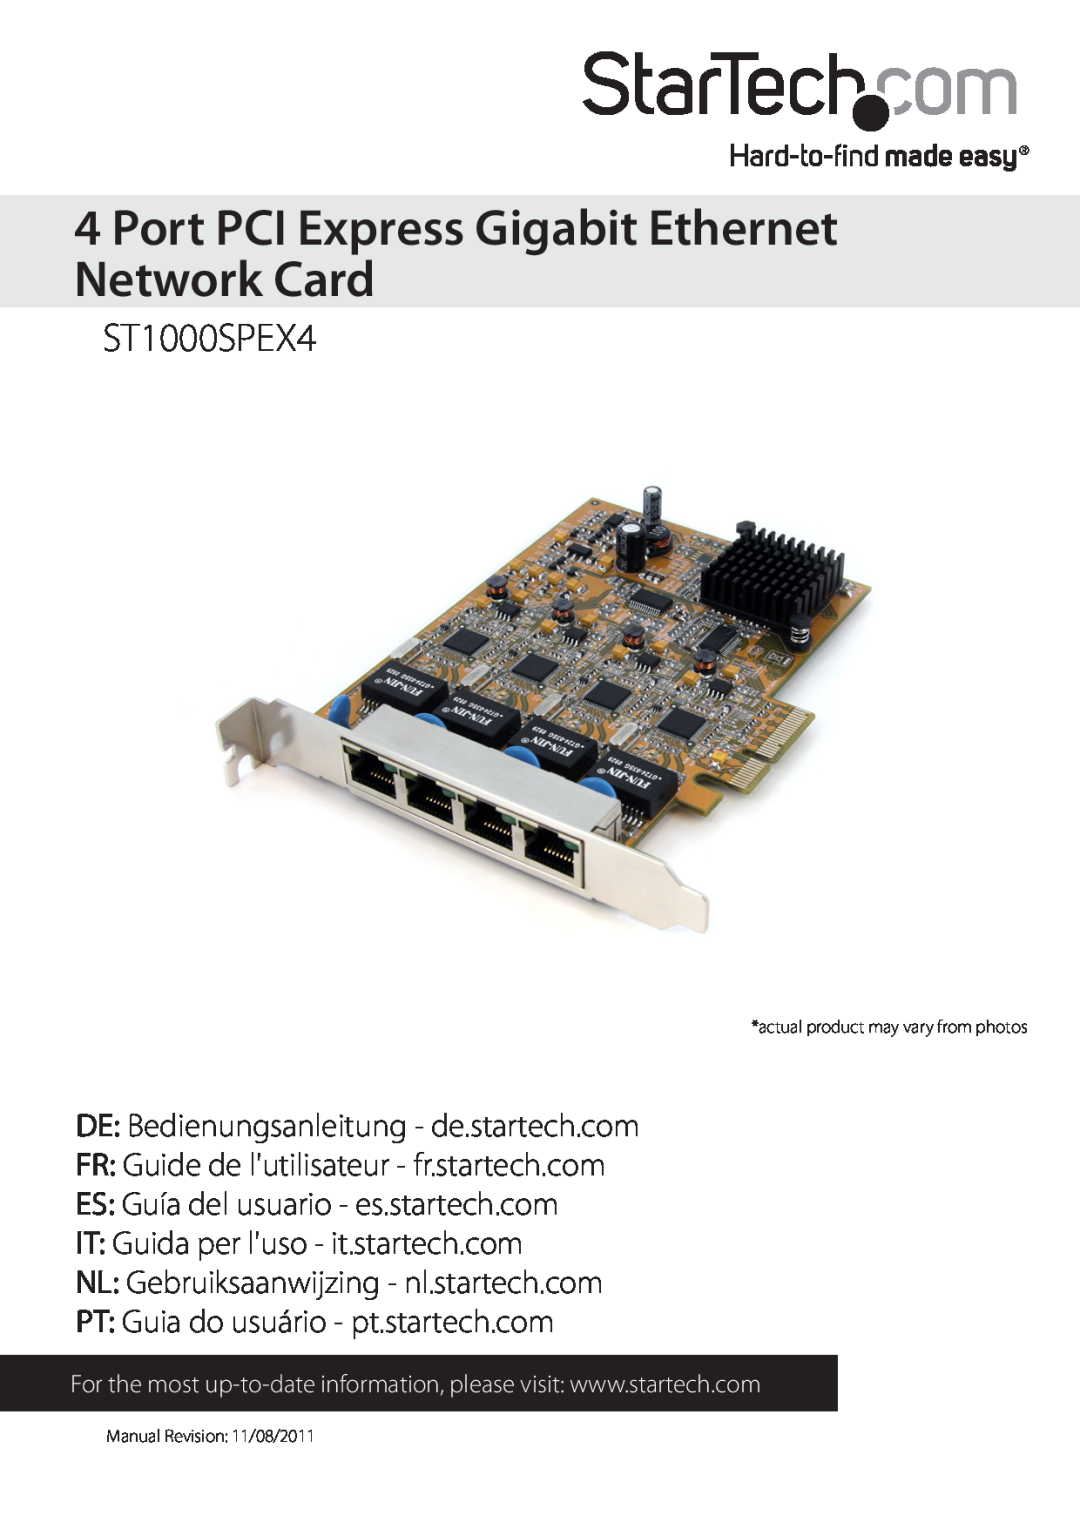 Star Tech Development ST1000SPEX4 manual Port PCI Express Gigabit Ethernet Network Card, Manual Revision 11/08/2011 